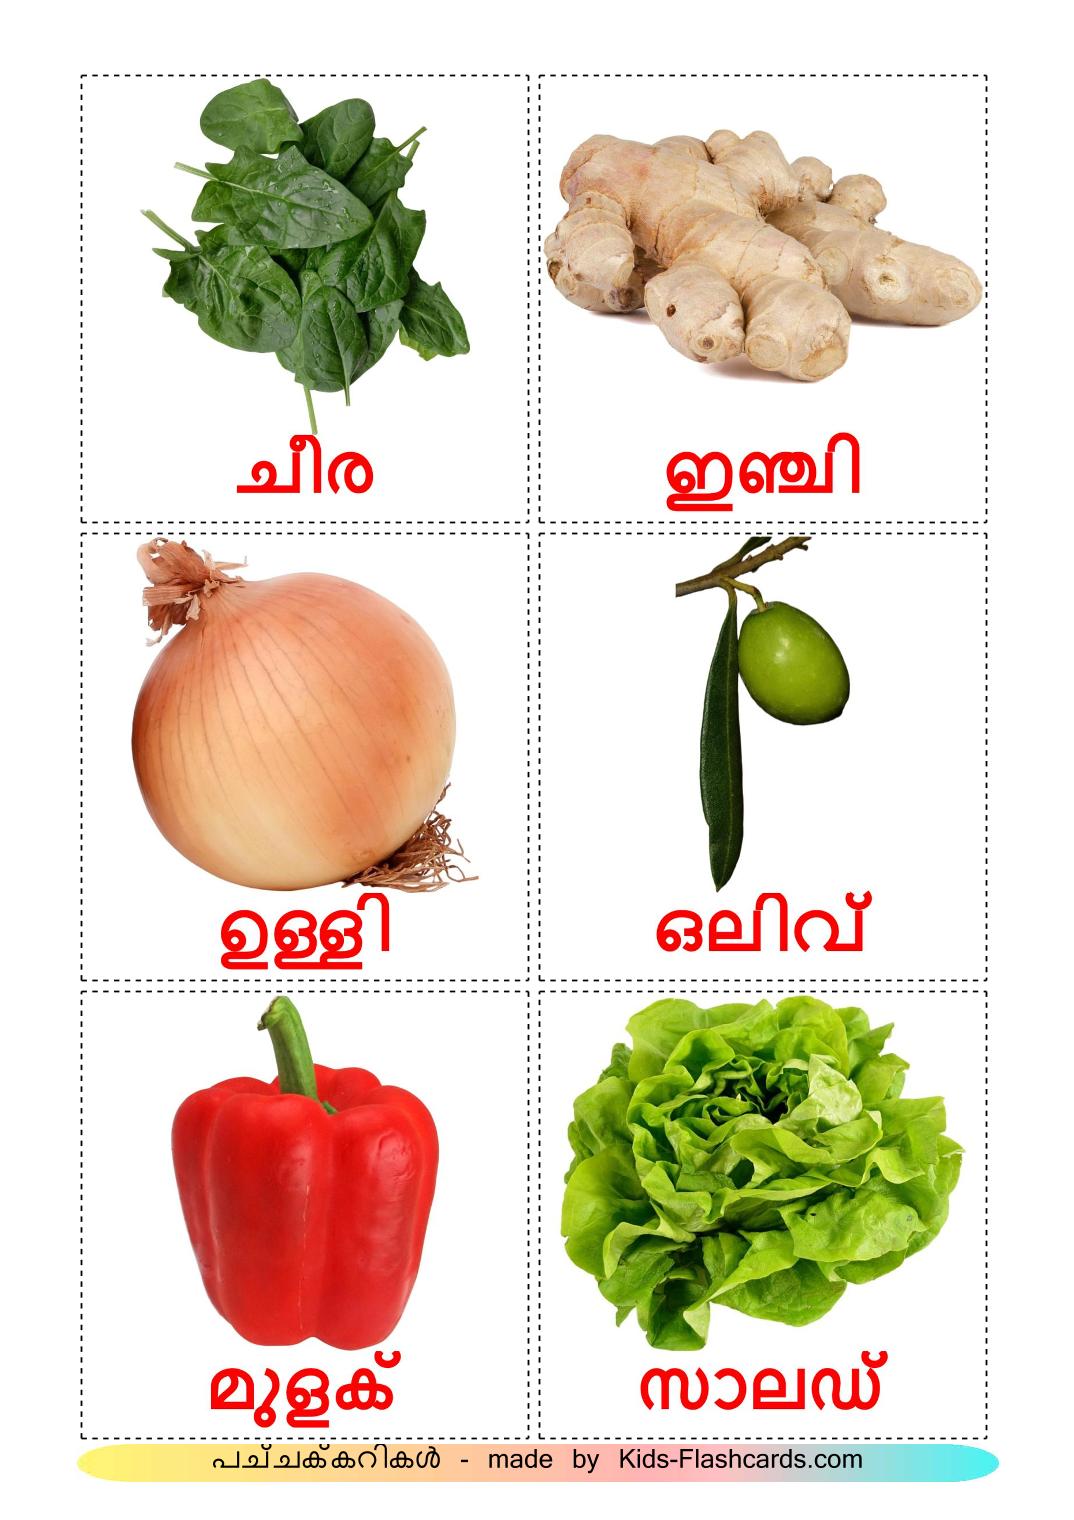 Verduras - 29 fichas de malayalam para imprimir gratis 